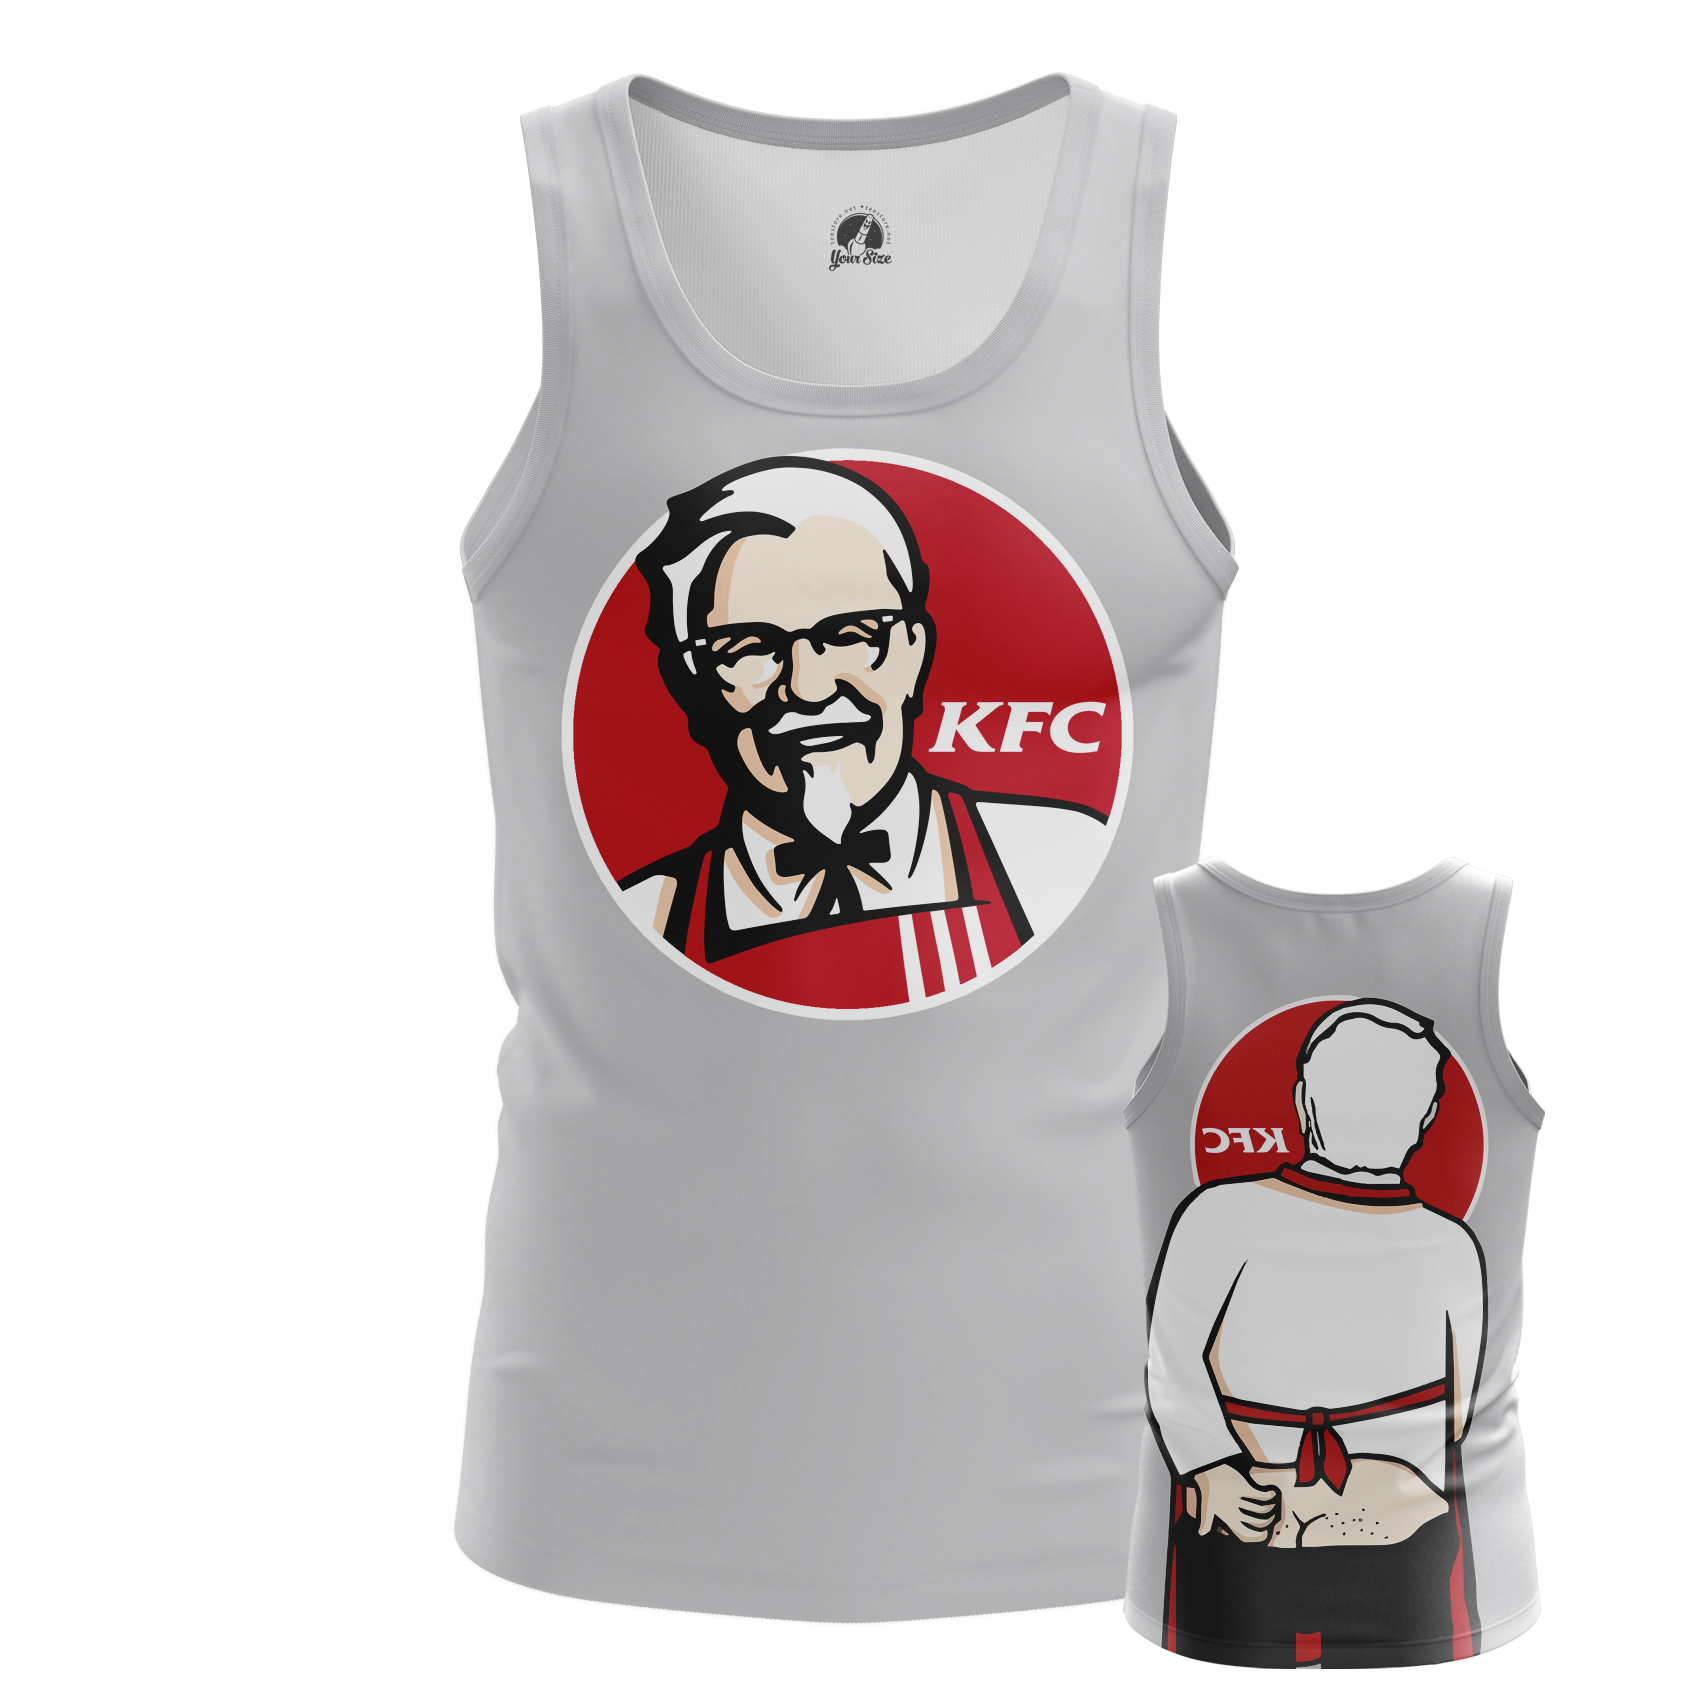 Майка боец. Супербоец KFC футболка. Майка боец KFC.